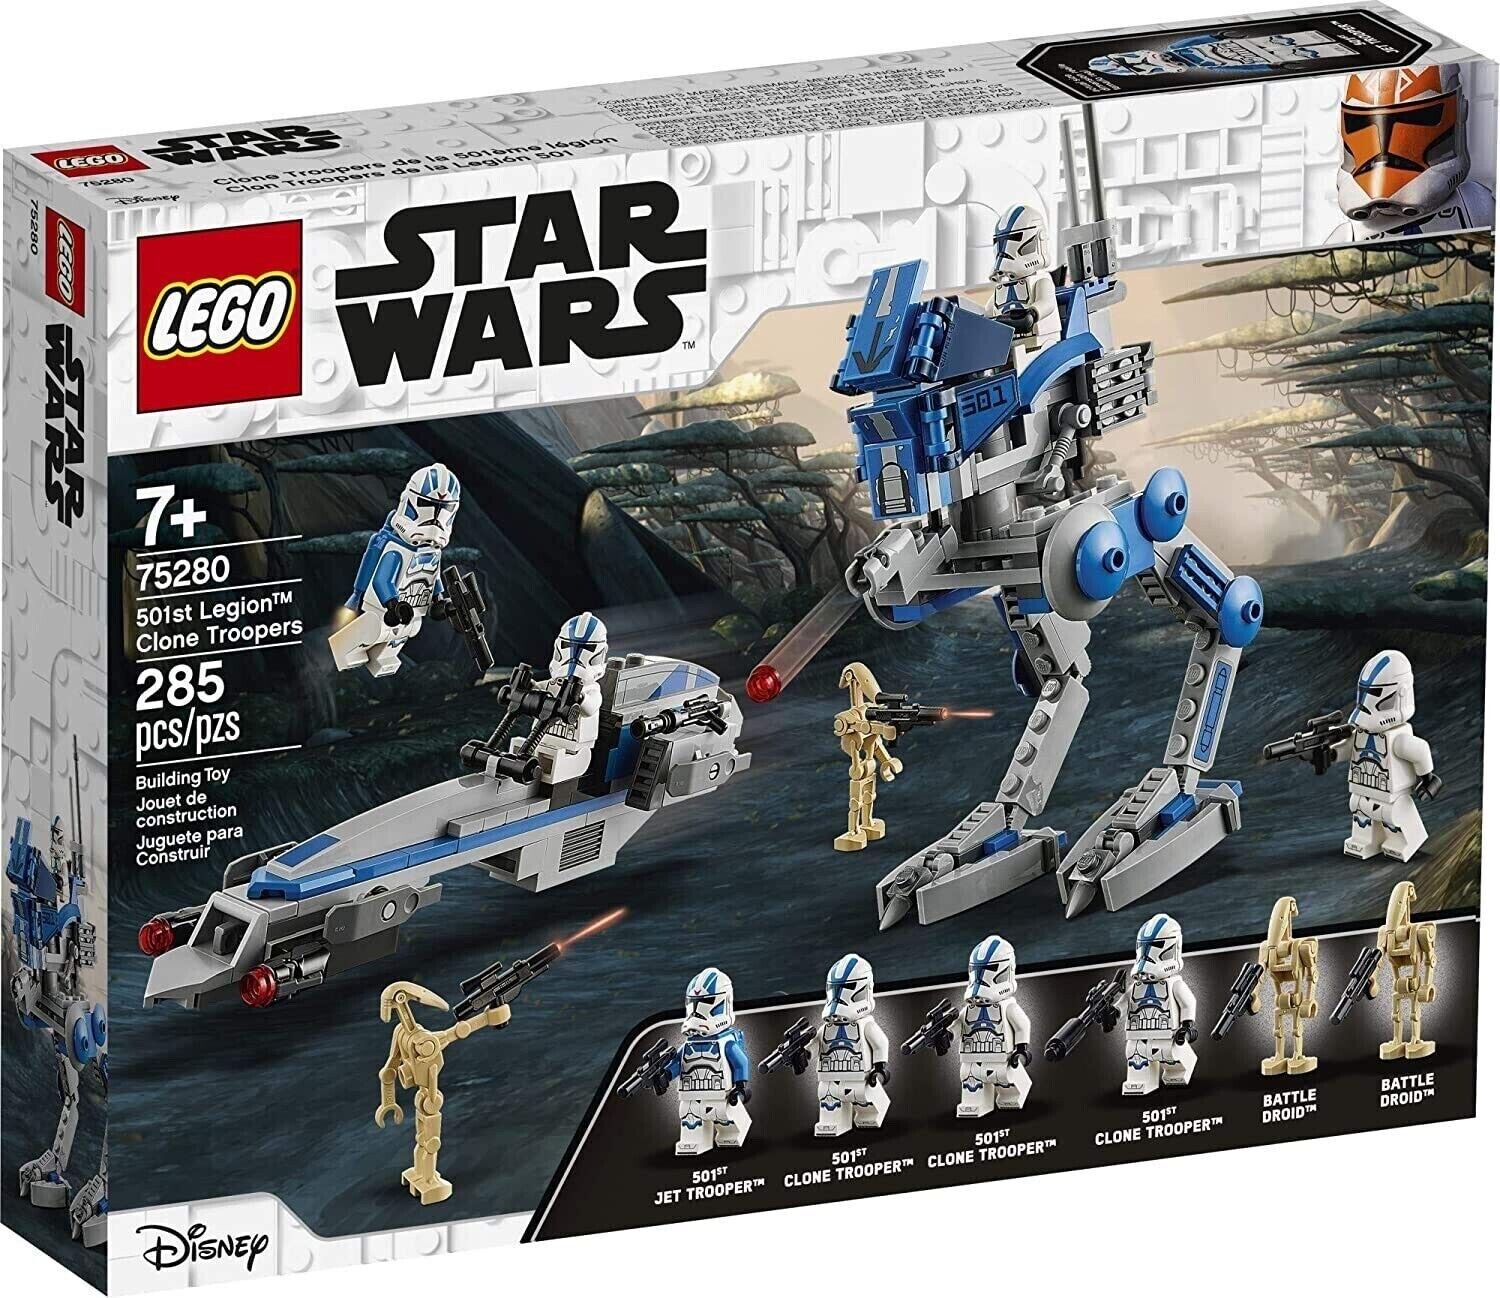 NEW LEGO Star Wars 501st Legion Clone Troopers 75280